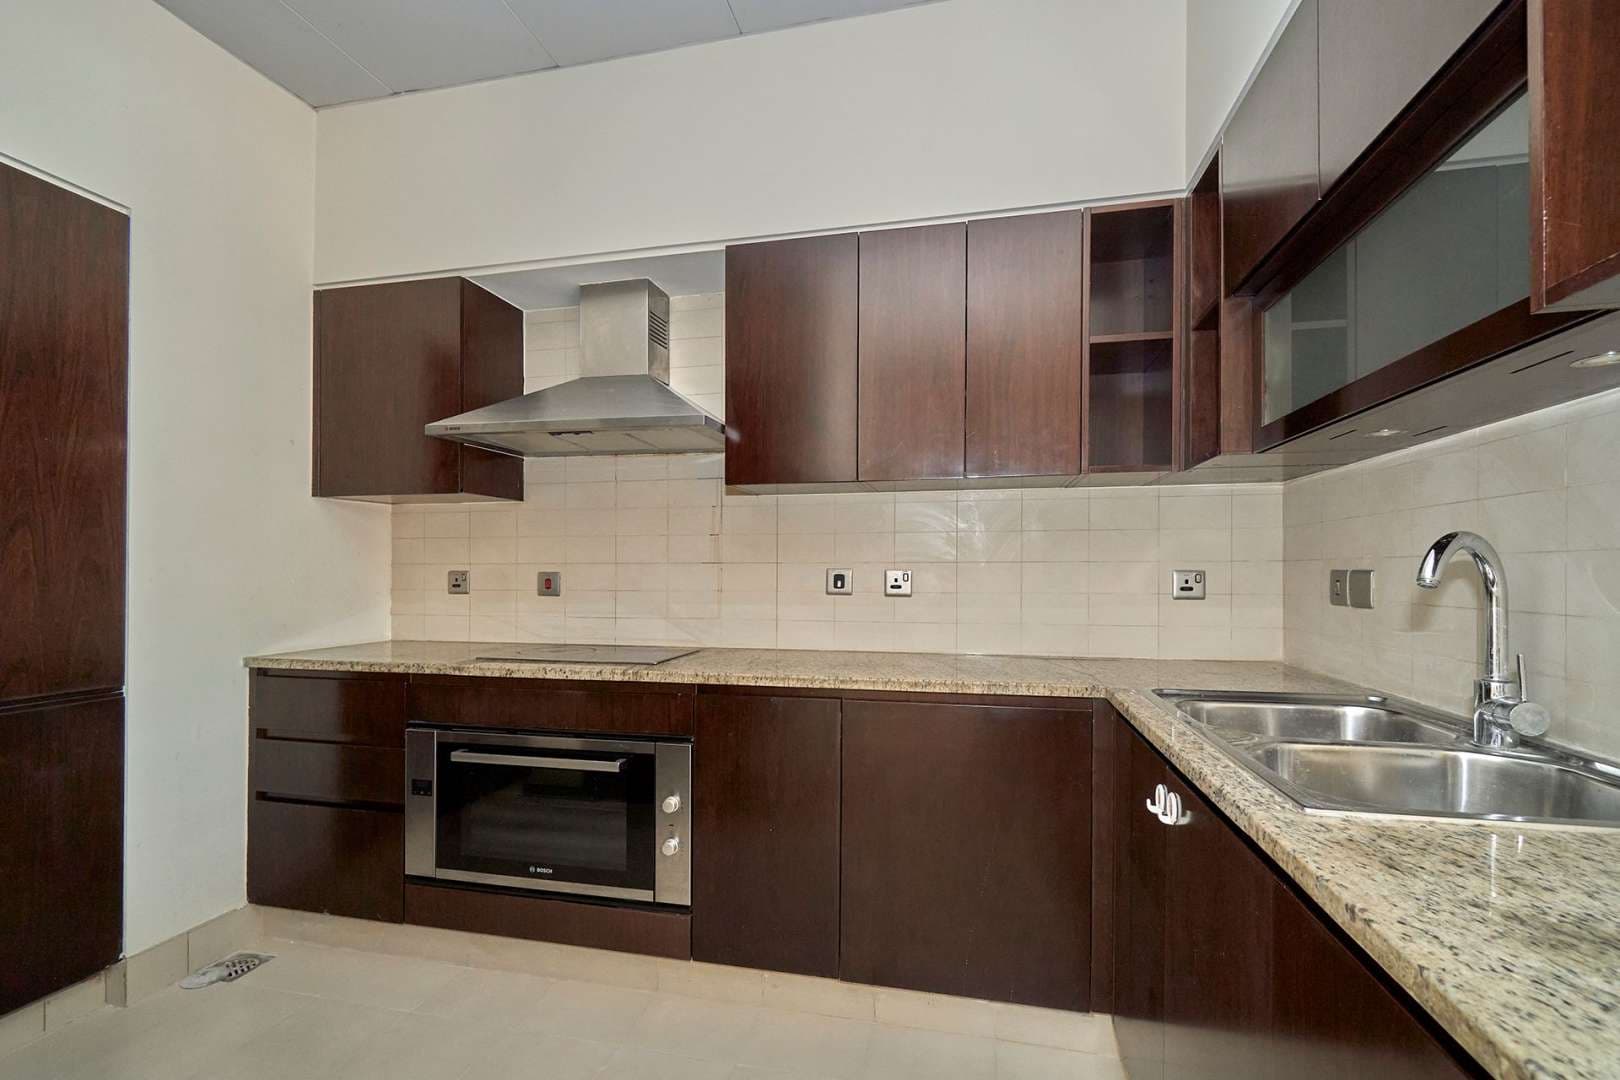 1 Bedroom Apartment For Rent Tiara Residences Lp06239 26da5ebf08adfa00.jpeg